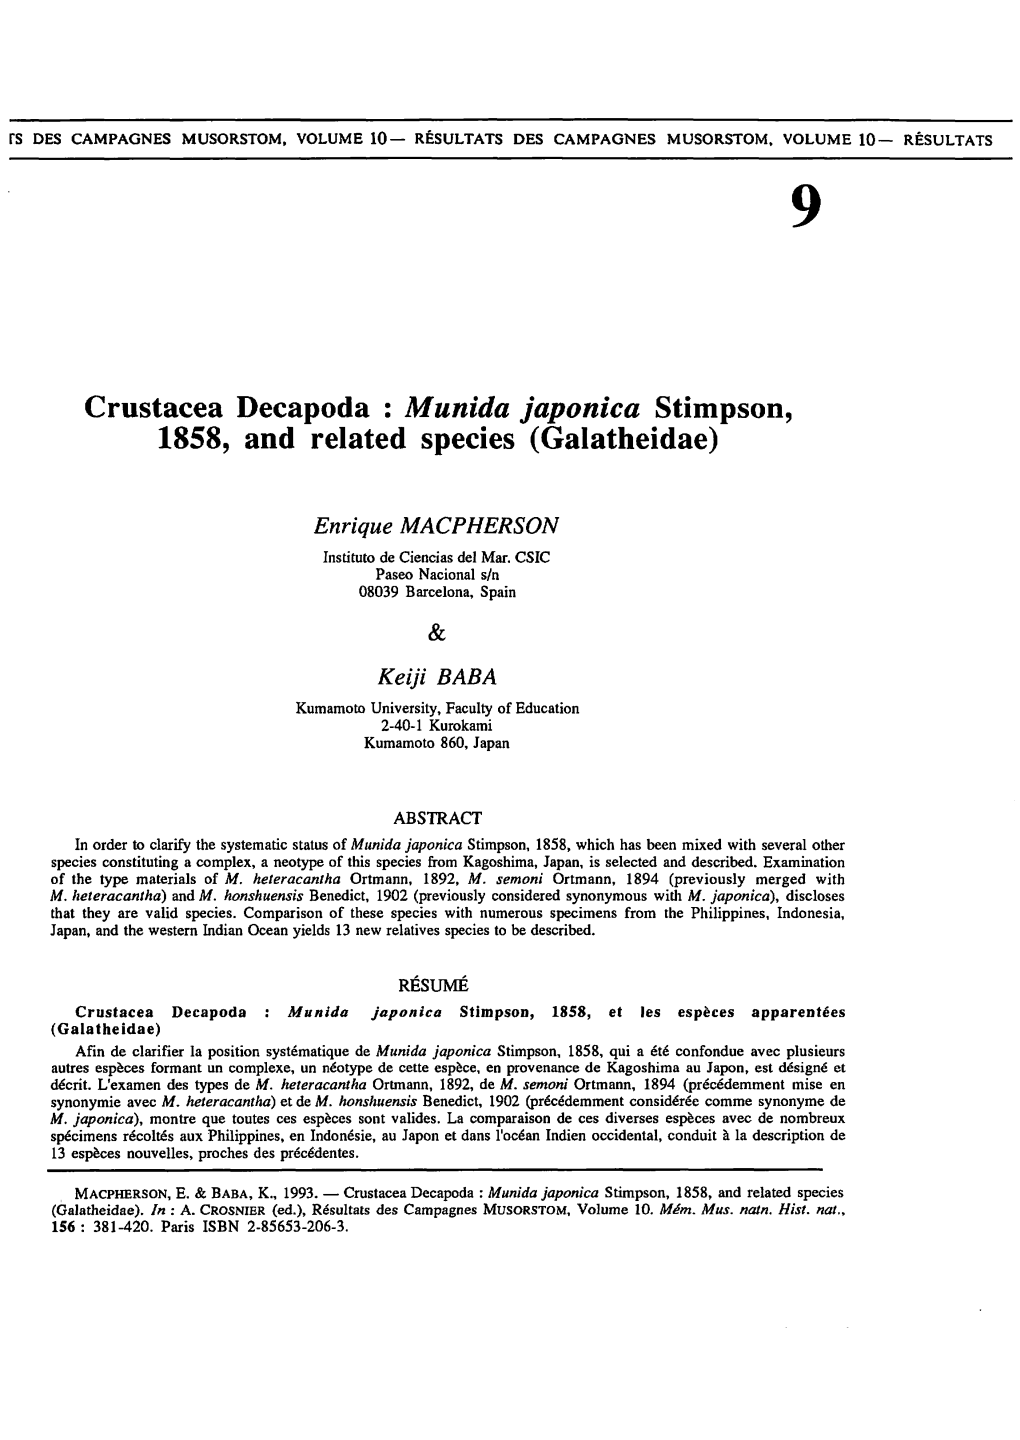 Crustacea Decapoda : Munida Japonica Stimpson, 1858, and Related Species (Galatheidae)